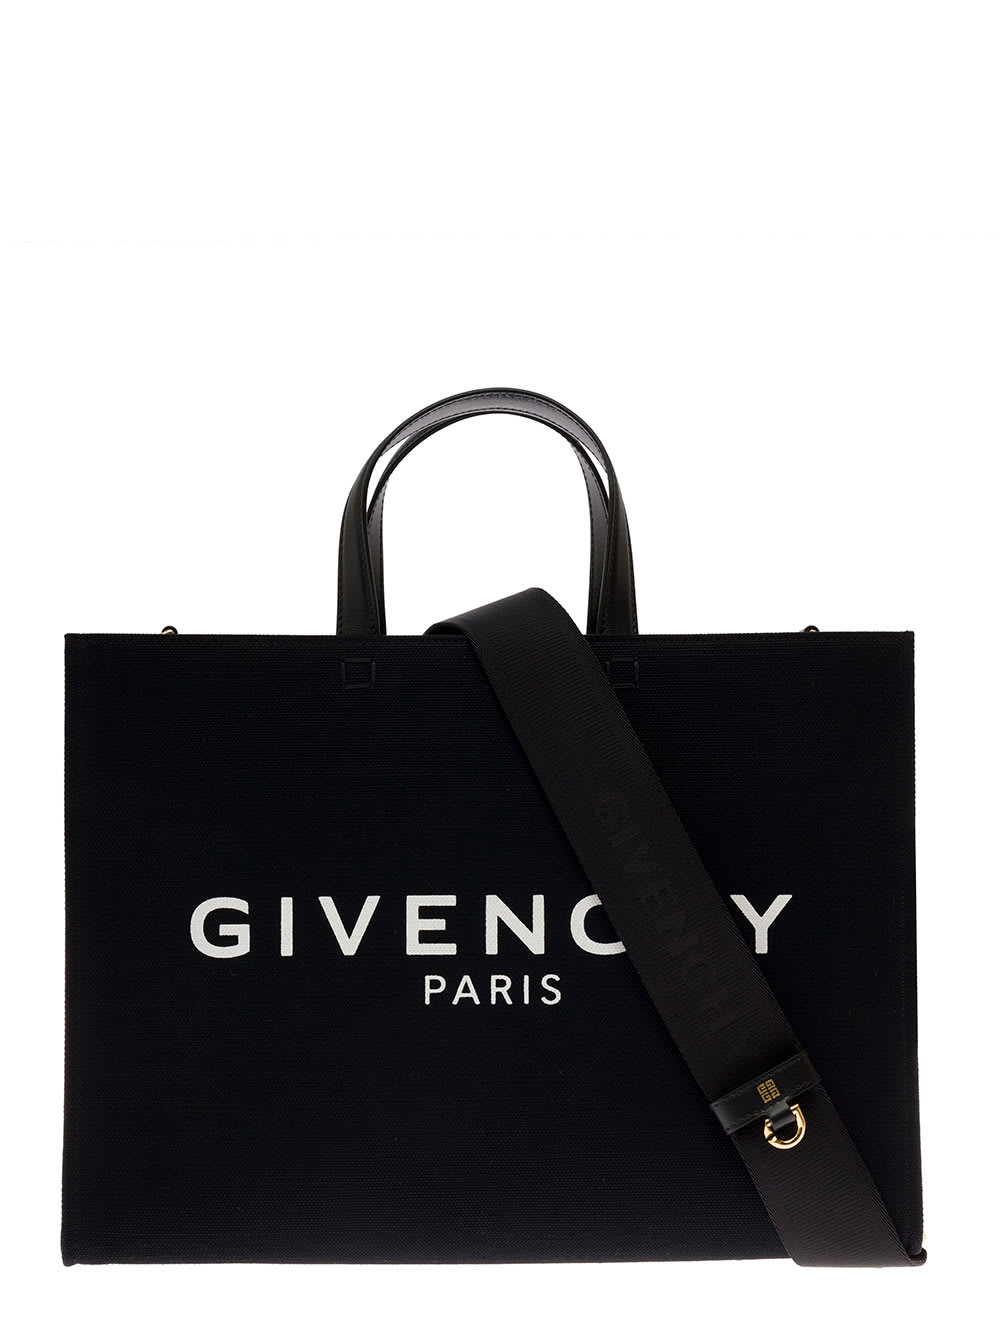 Givenchy Womans G Tote Black Cotton Canvas Shopper Bag With Logo Print